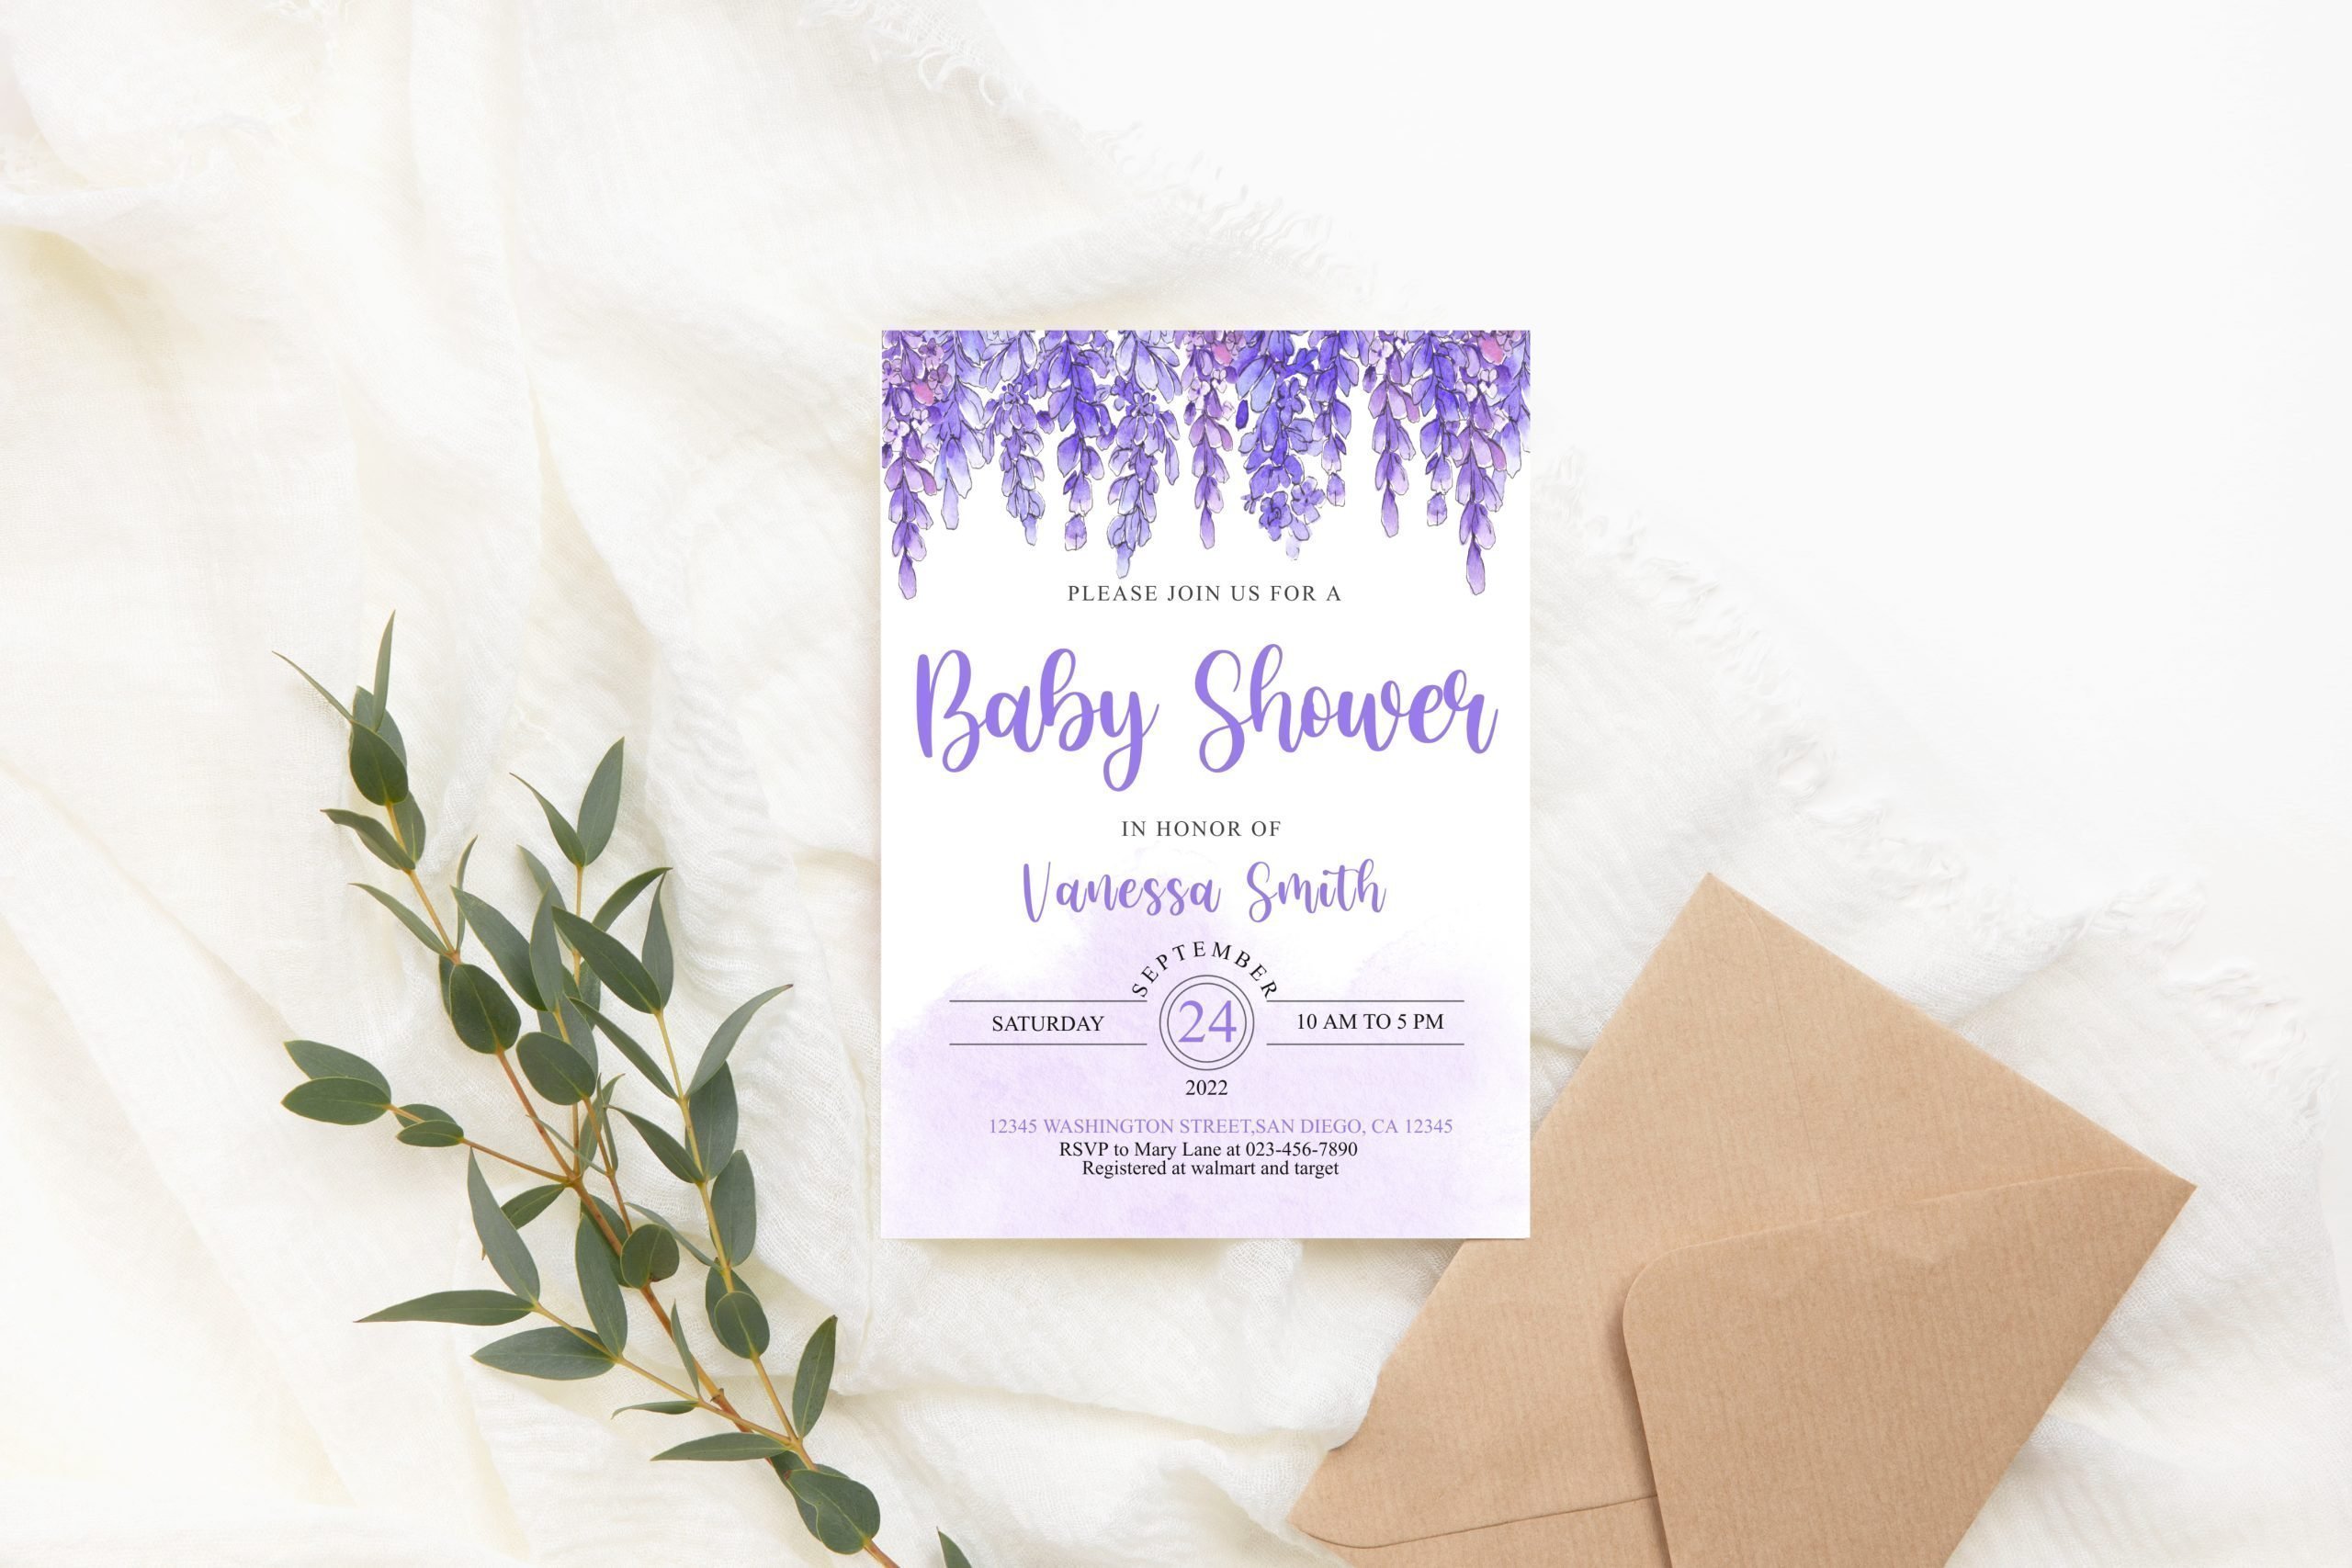 Baby Shower Invitation / Set Editable Lavender Baby Shower Invitation, Purple Floral Design, PRINTABLE 5x7 Size